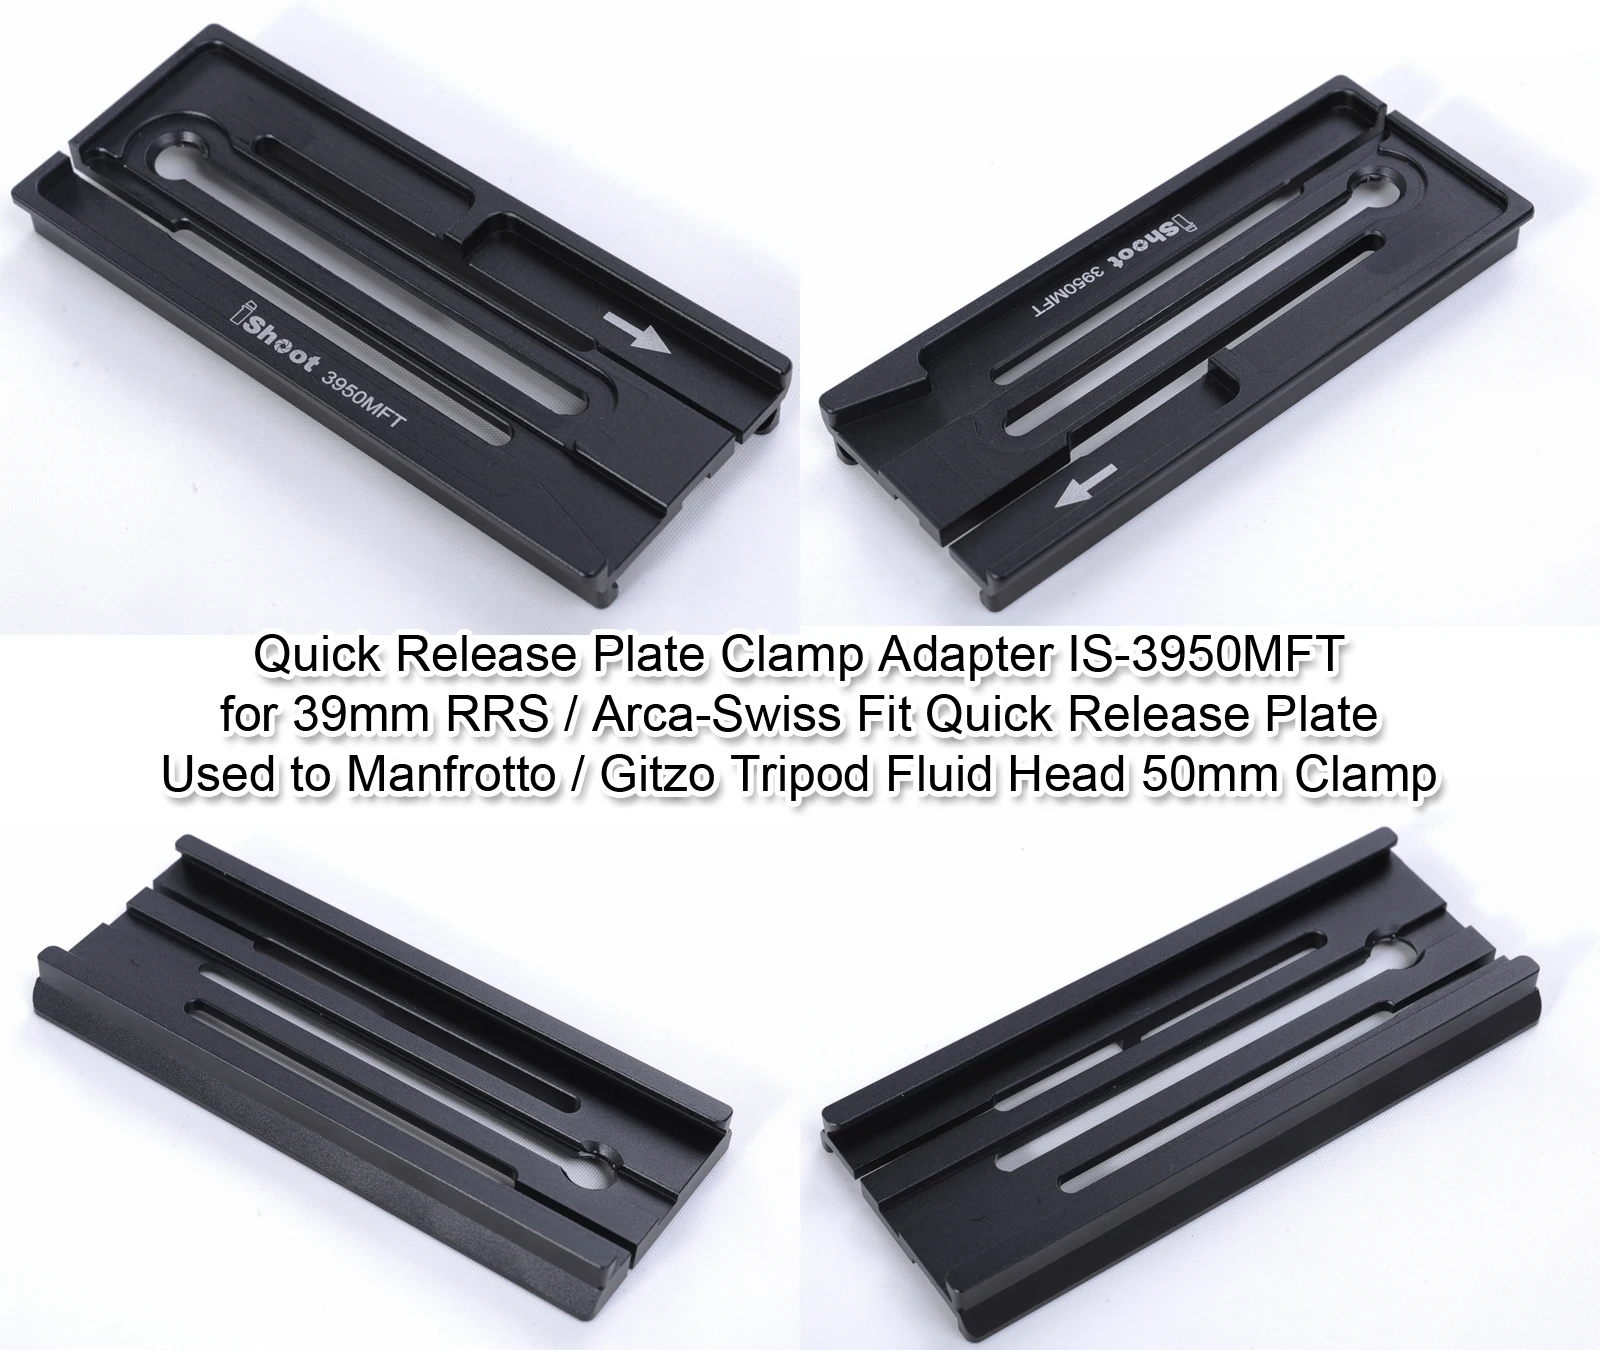 Adapter for 39mm Arca-swiss Quick Release Plate to 50mm GITZO Tripod Ballhead